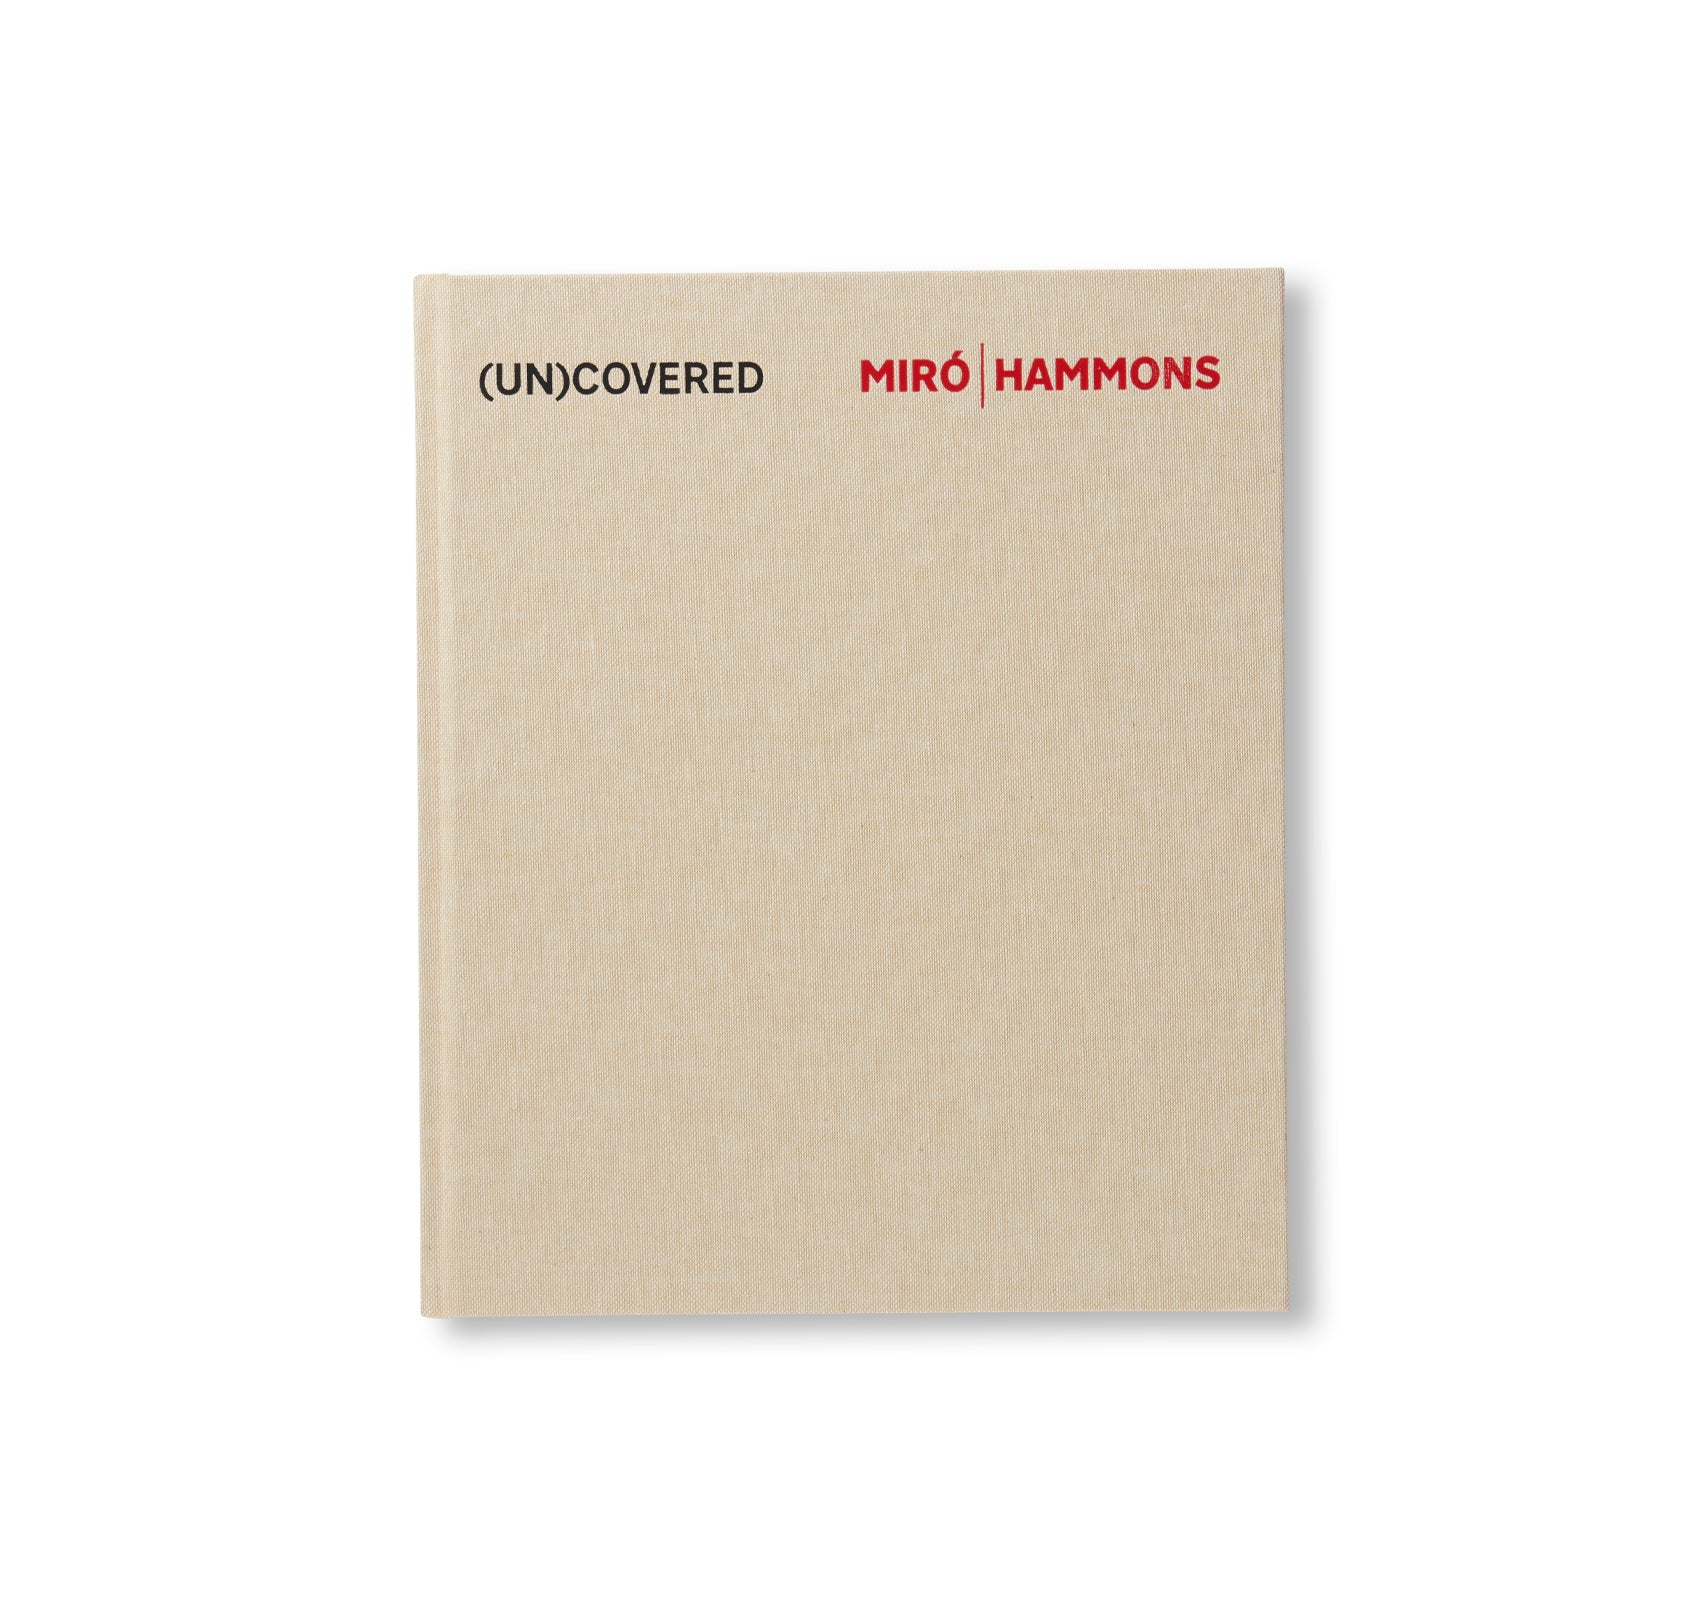 (UN)COVERED: MIRÓ | HAMMONS by Joan Miró, David Hammons